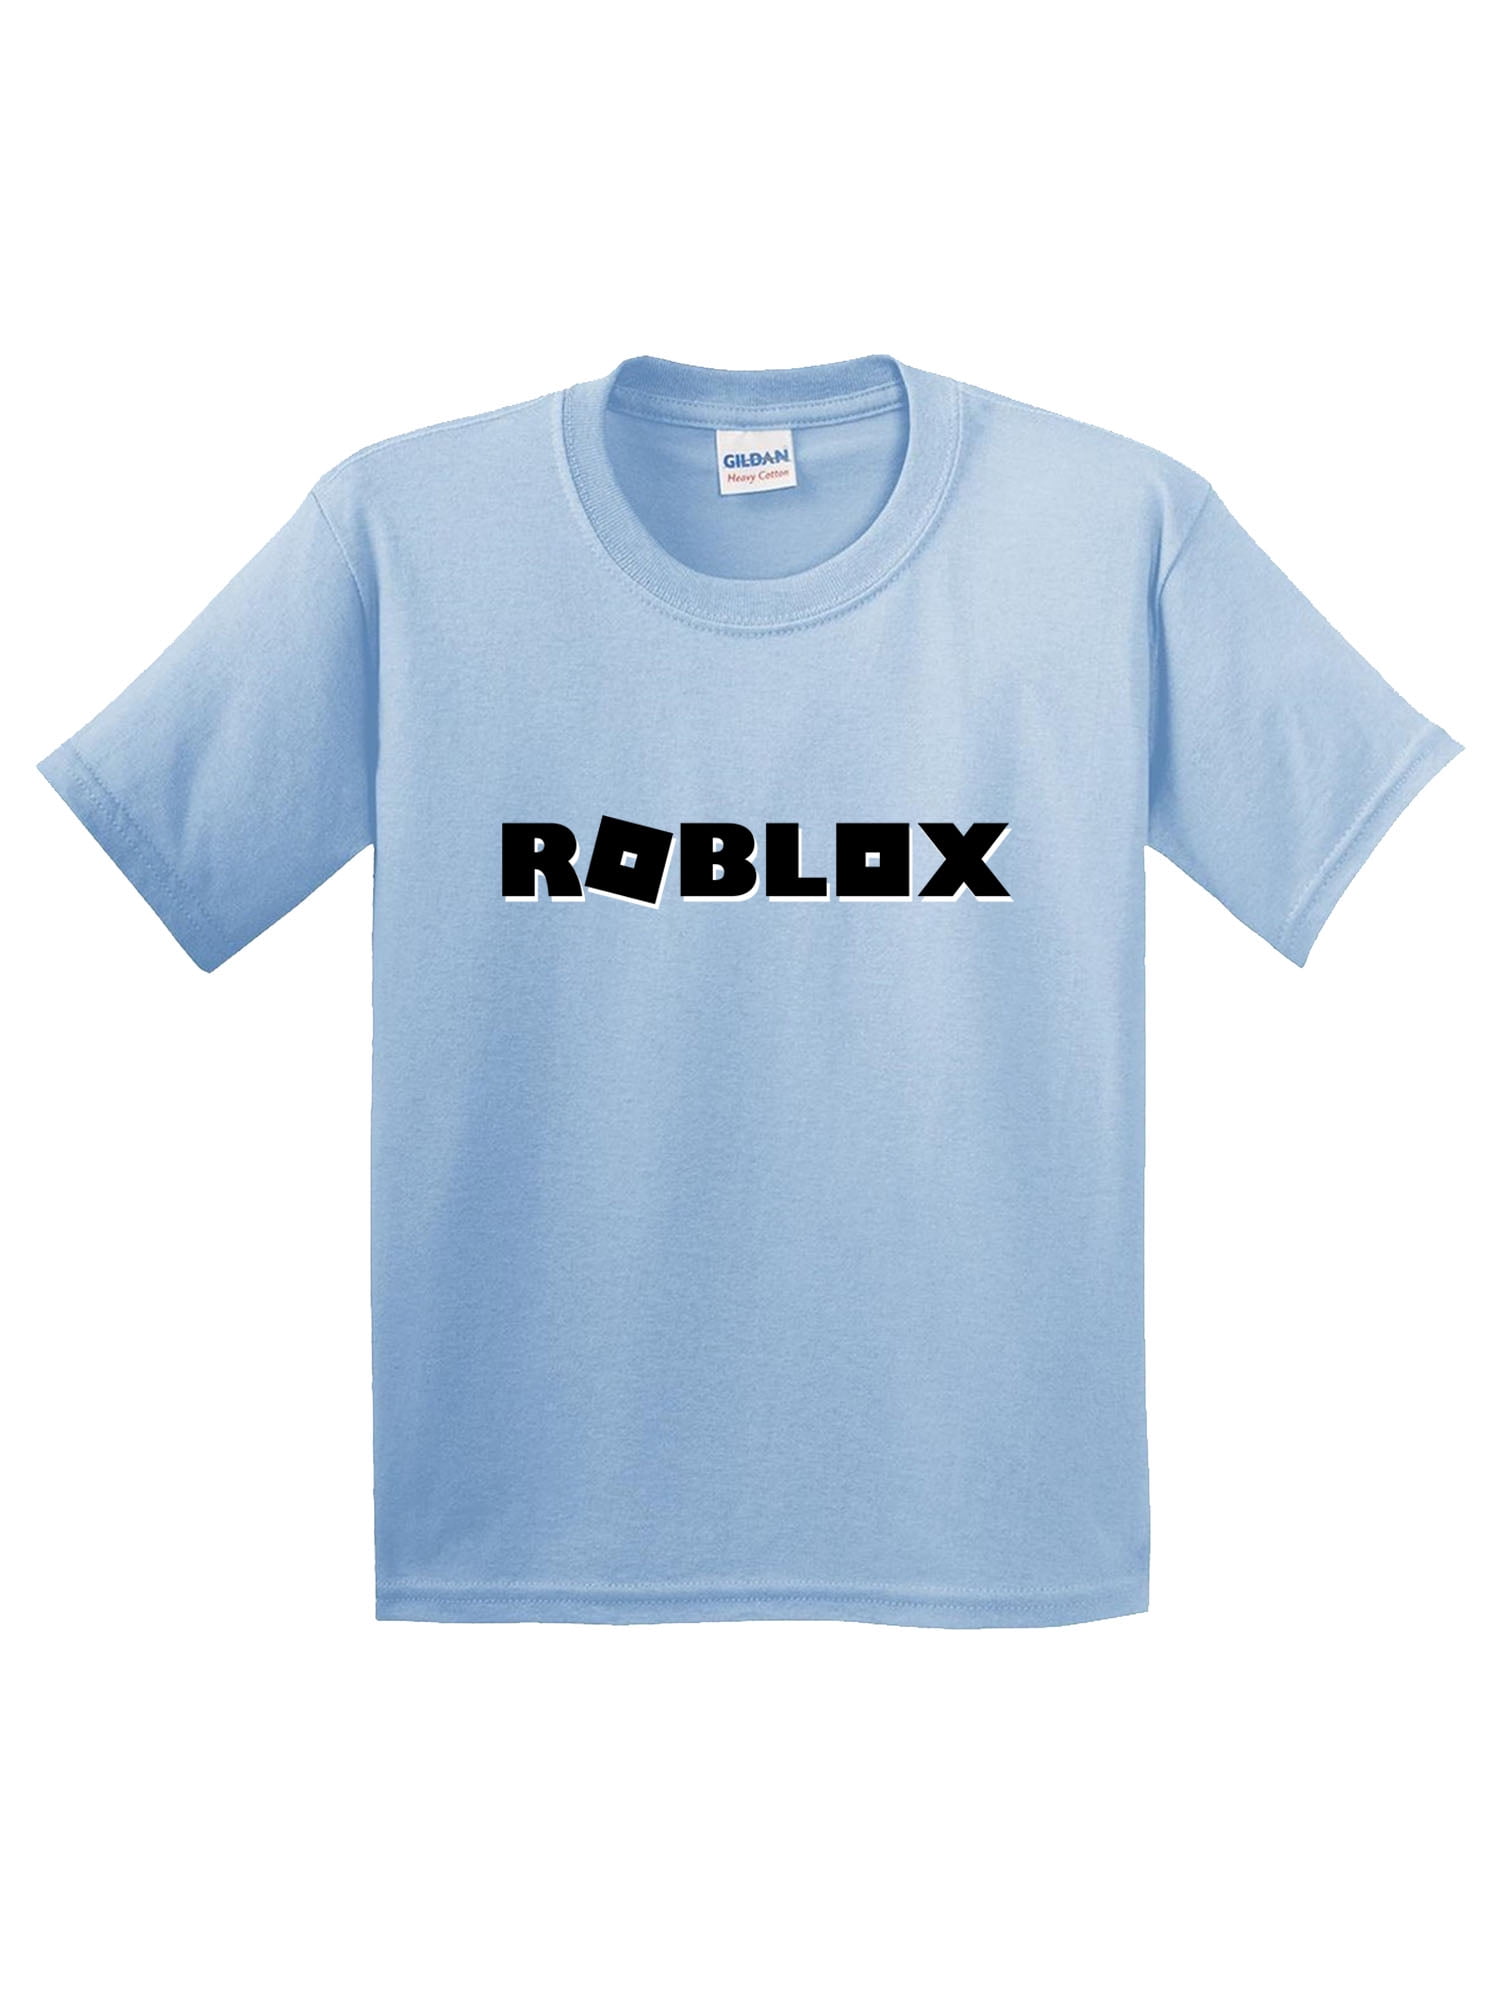 New Way New Way 1168 Youth T Shirt Roblox Block Logo Game Accent Medium Light Blue Walmart Com Walmart Com - roblox t shirt size